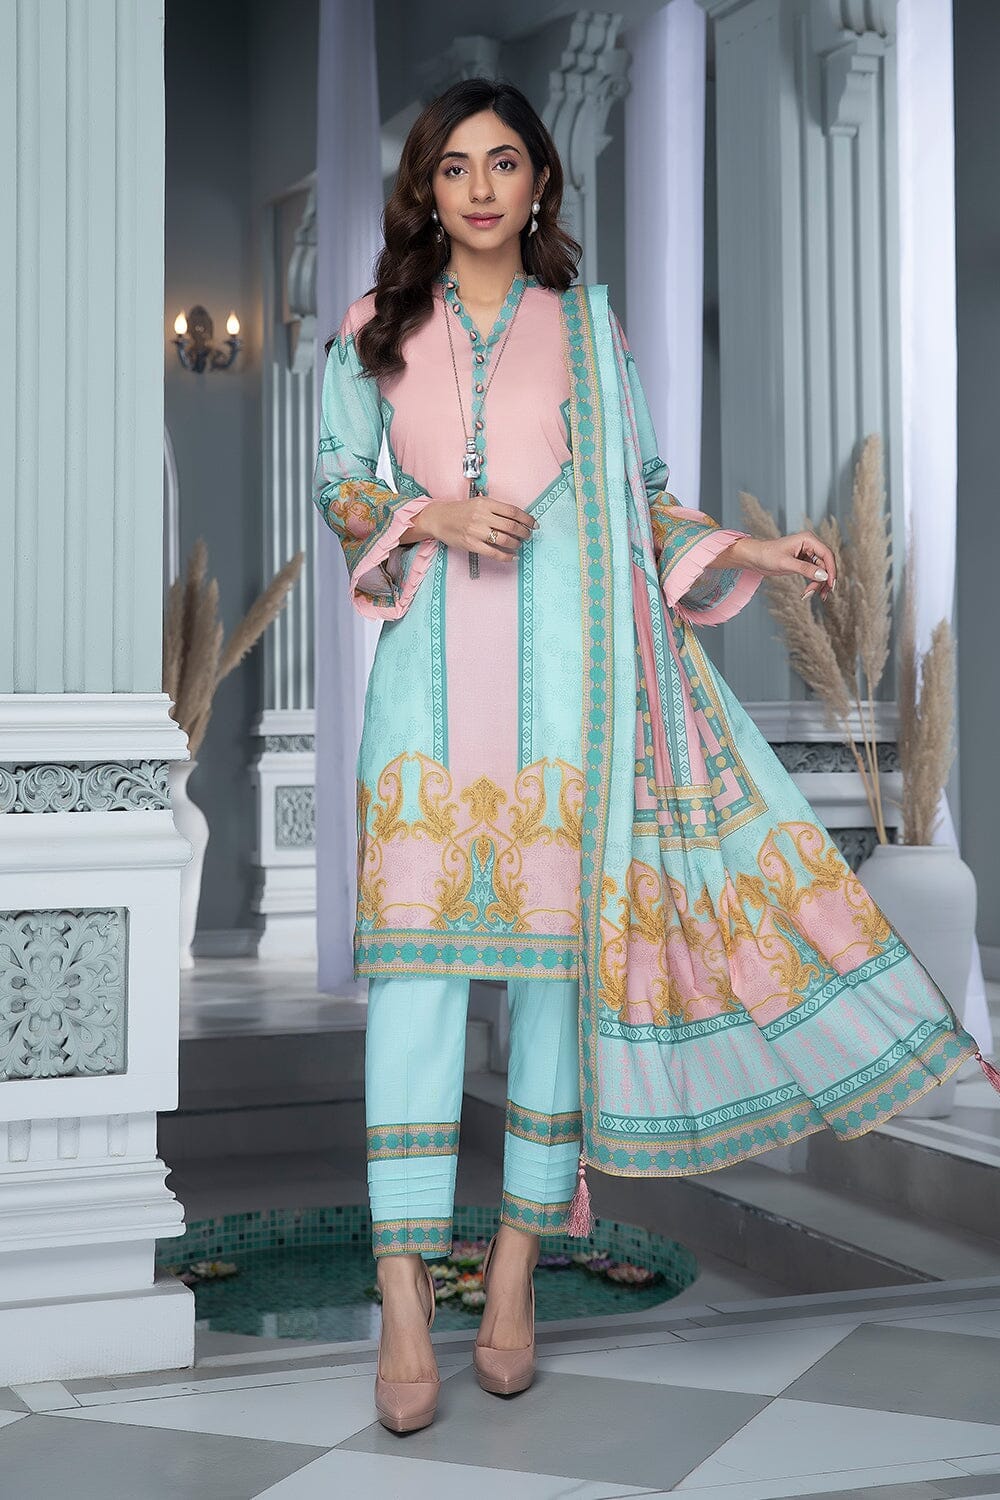 Punjabi Bridal Suit Design 2022 / Newly Married Girl Suit Design / Latest  Bridal Suit Design Images - YouTube